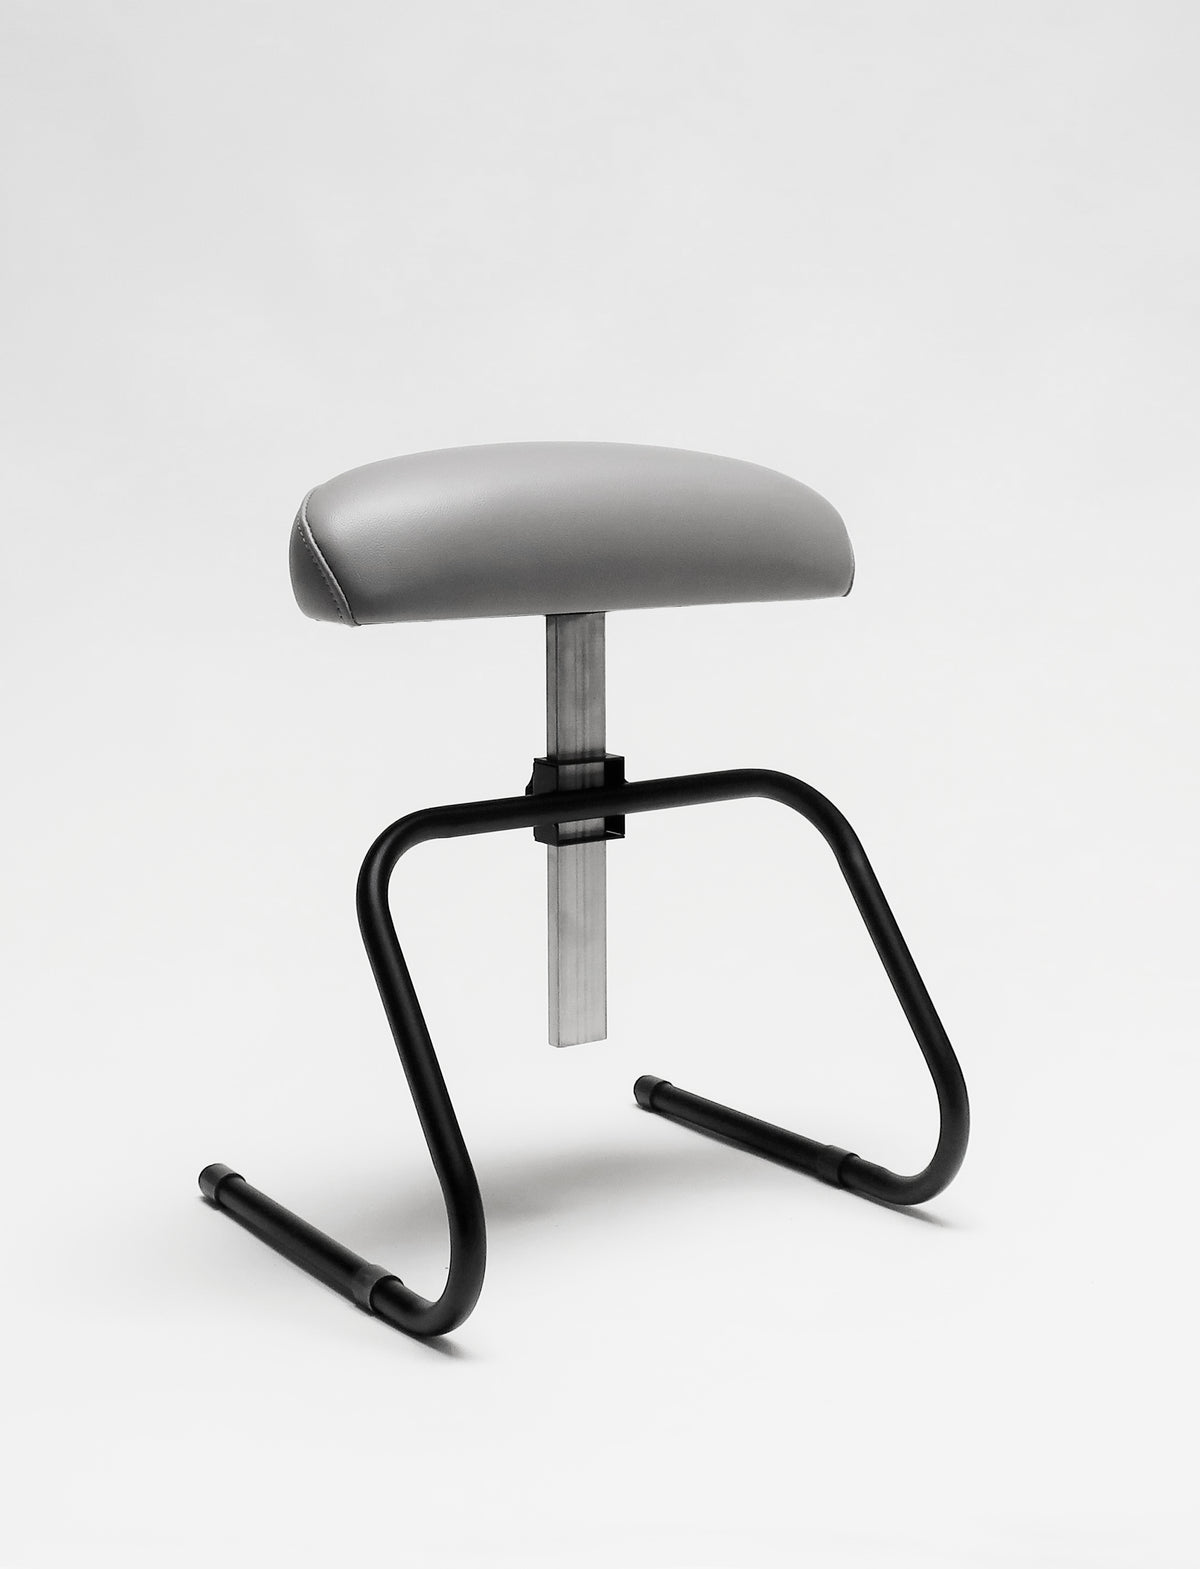 Belava Free Standing Footrest - Custom Color Upholstery